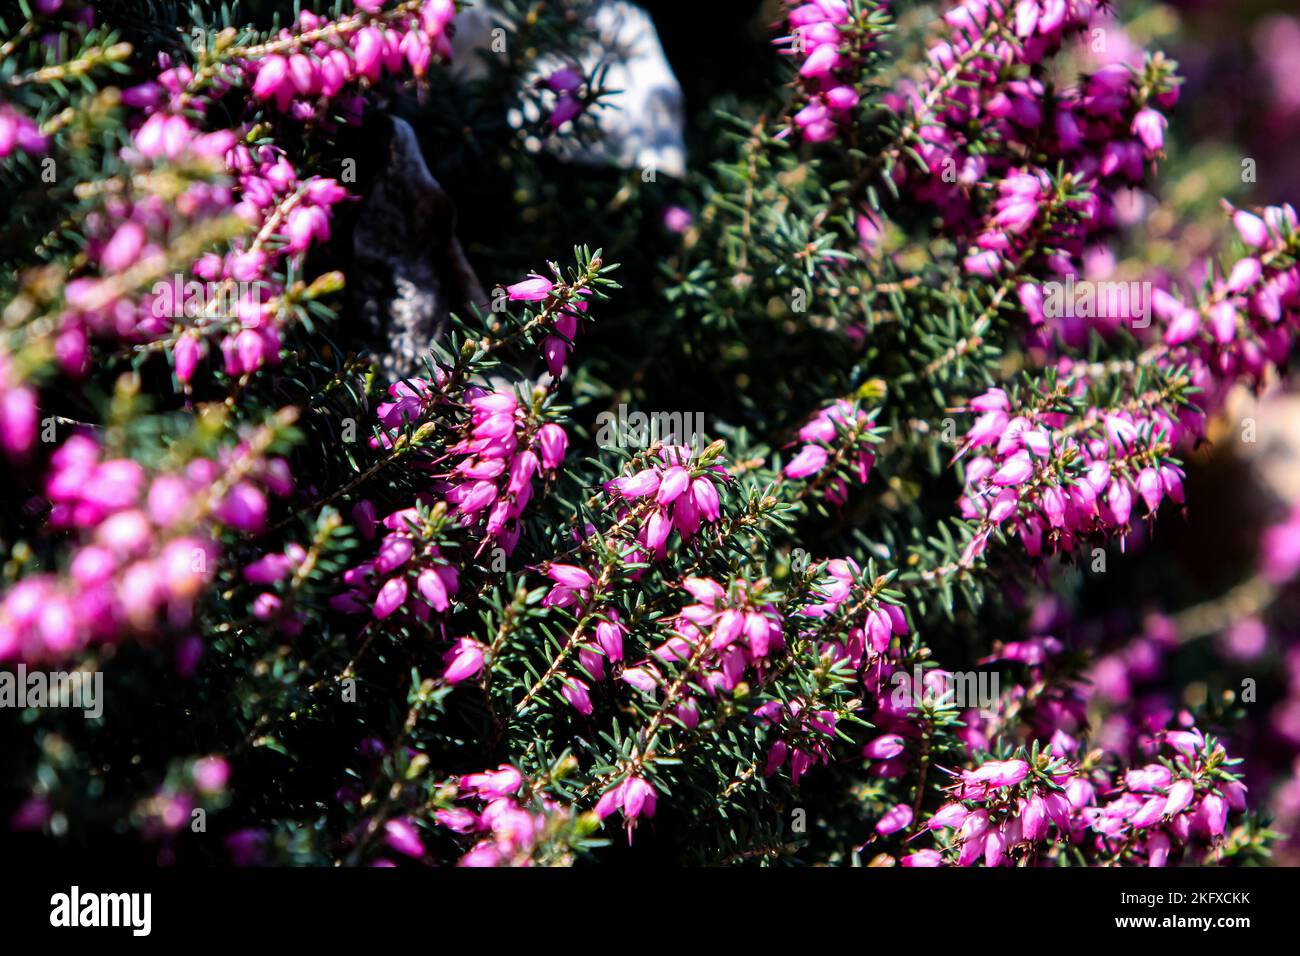 Pink Darley Dale heath (Erica darleyensis) in the garden Stock Photo